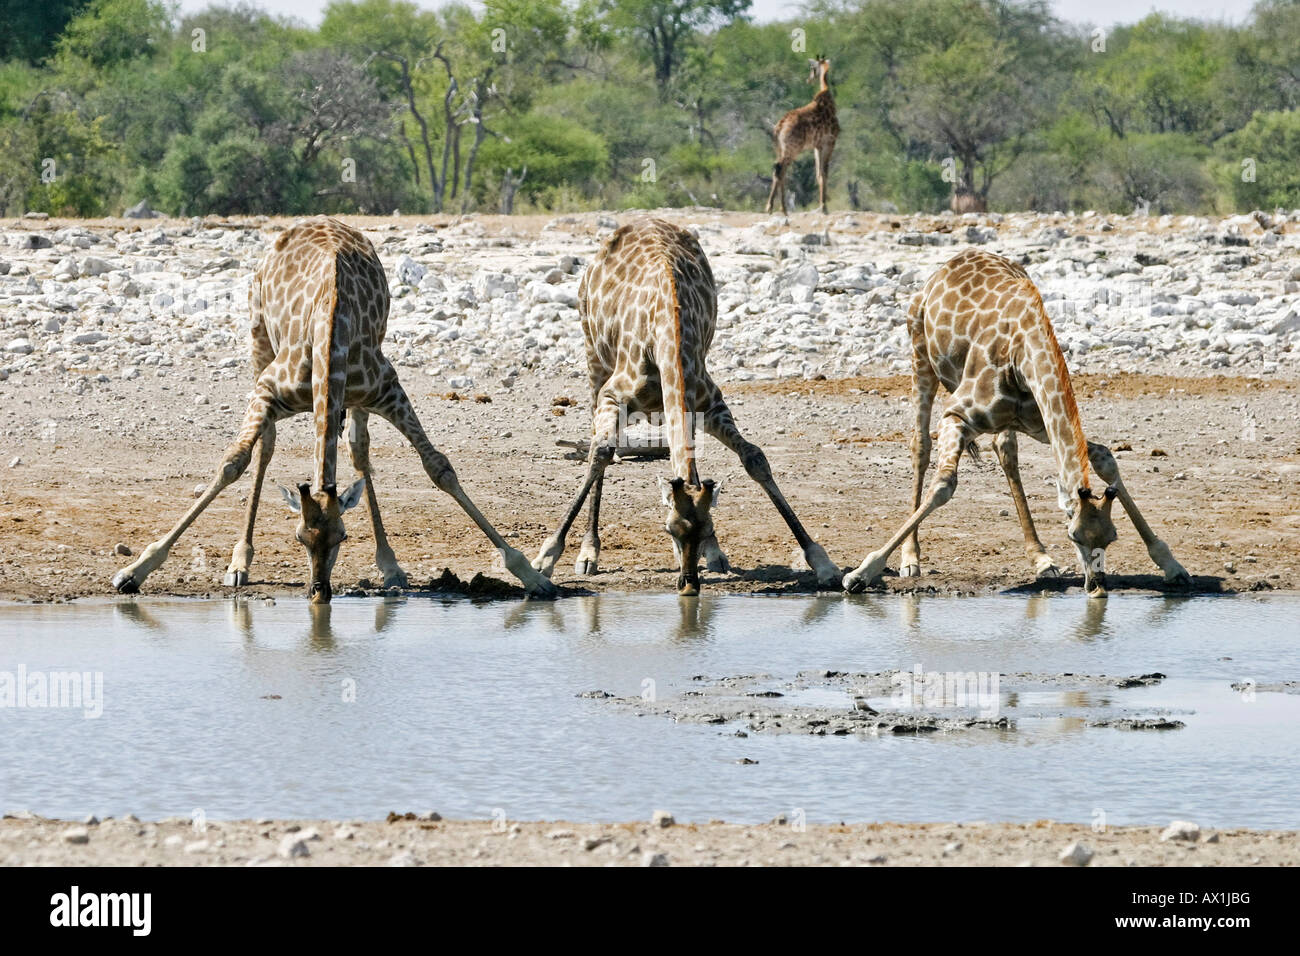 Drinking giraffes at a waterhole (Giraffa camelopardalis), Etosha National Park, Namibia, Africa Stock Photo